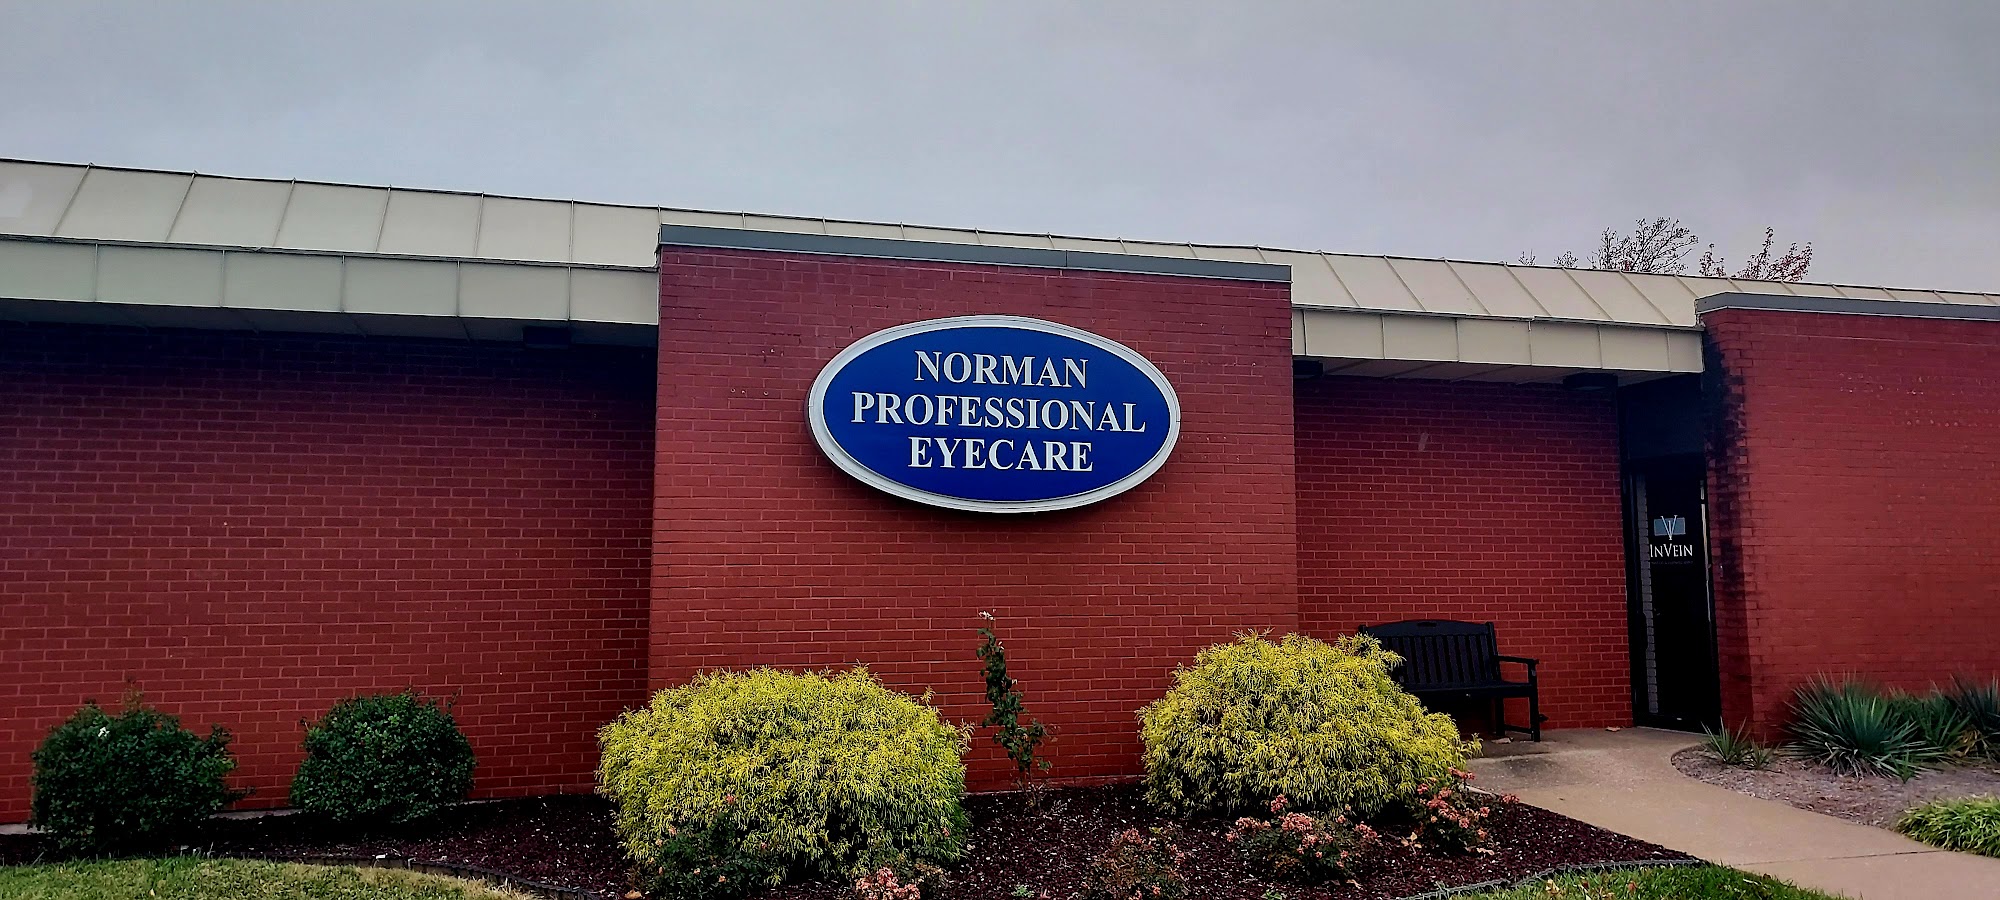 Norman Professional Eyecare